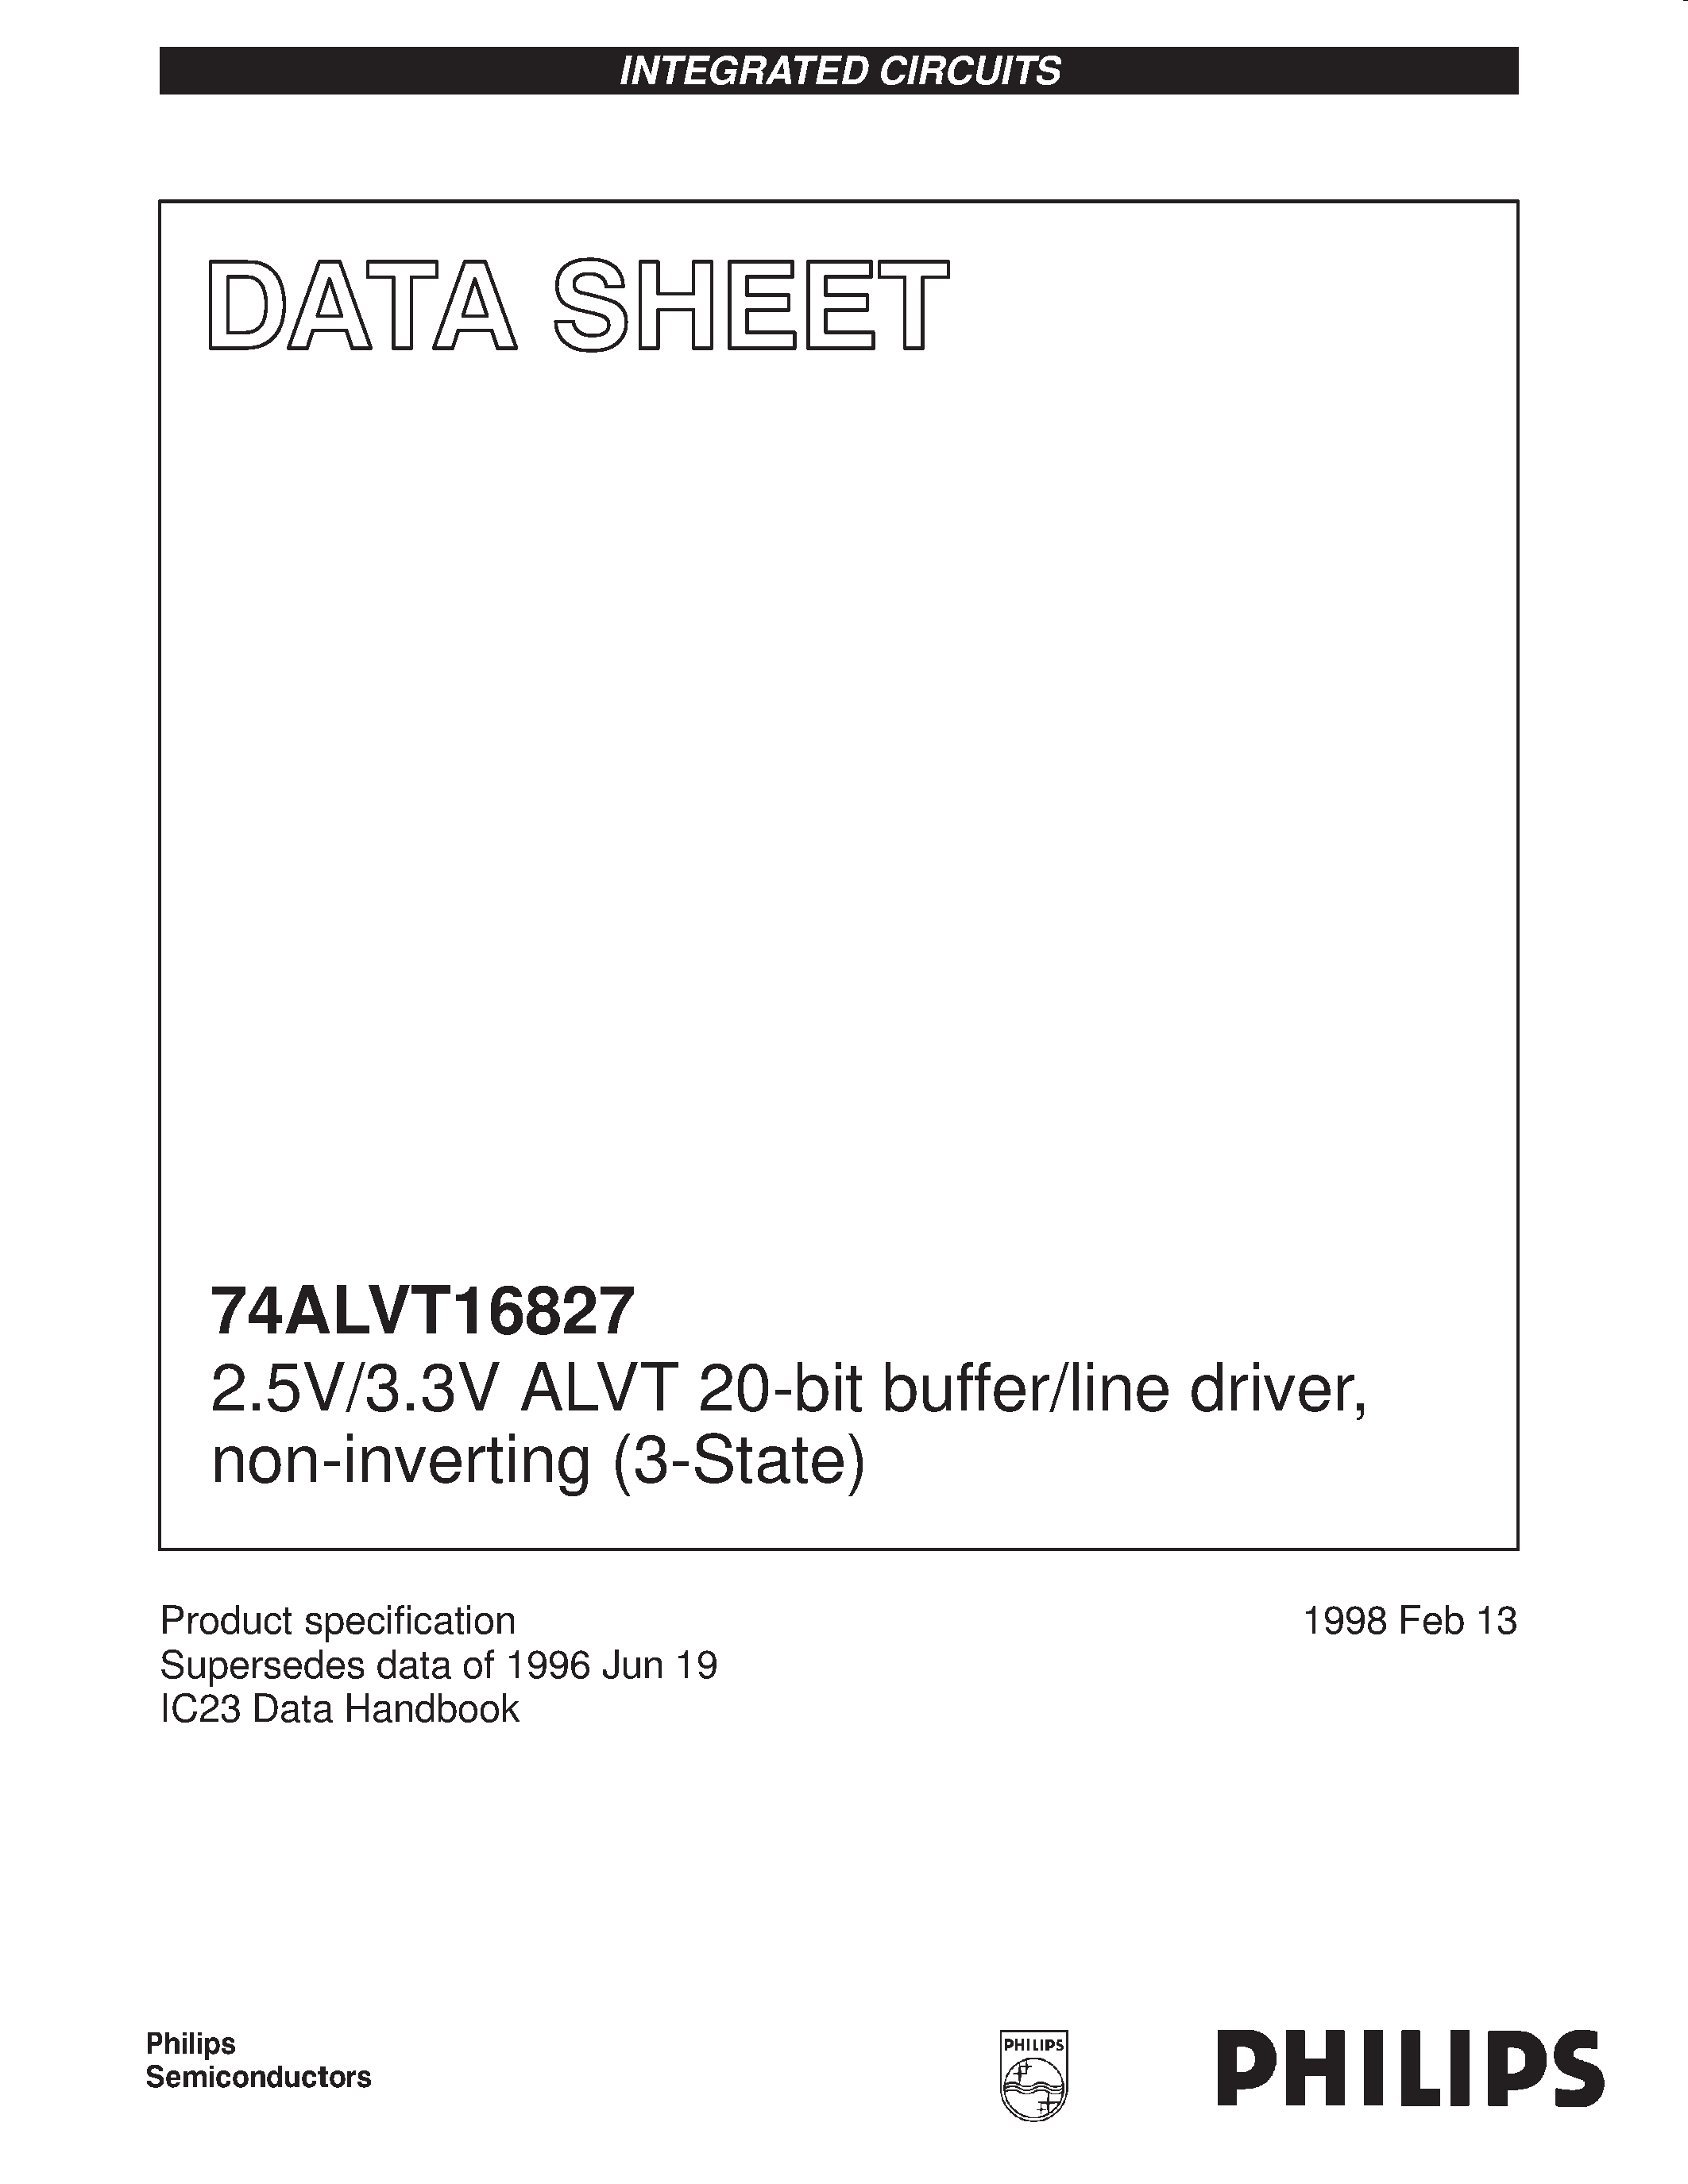 Даташит 74ALVT16827 - 2.5V/3.3V ALVT 20-bit buffer/line driver/ non-inverting 3-State страница 1